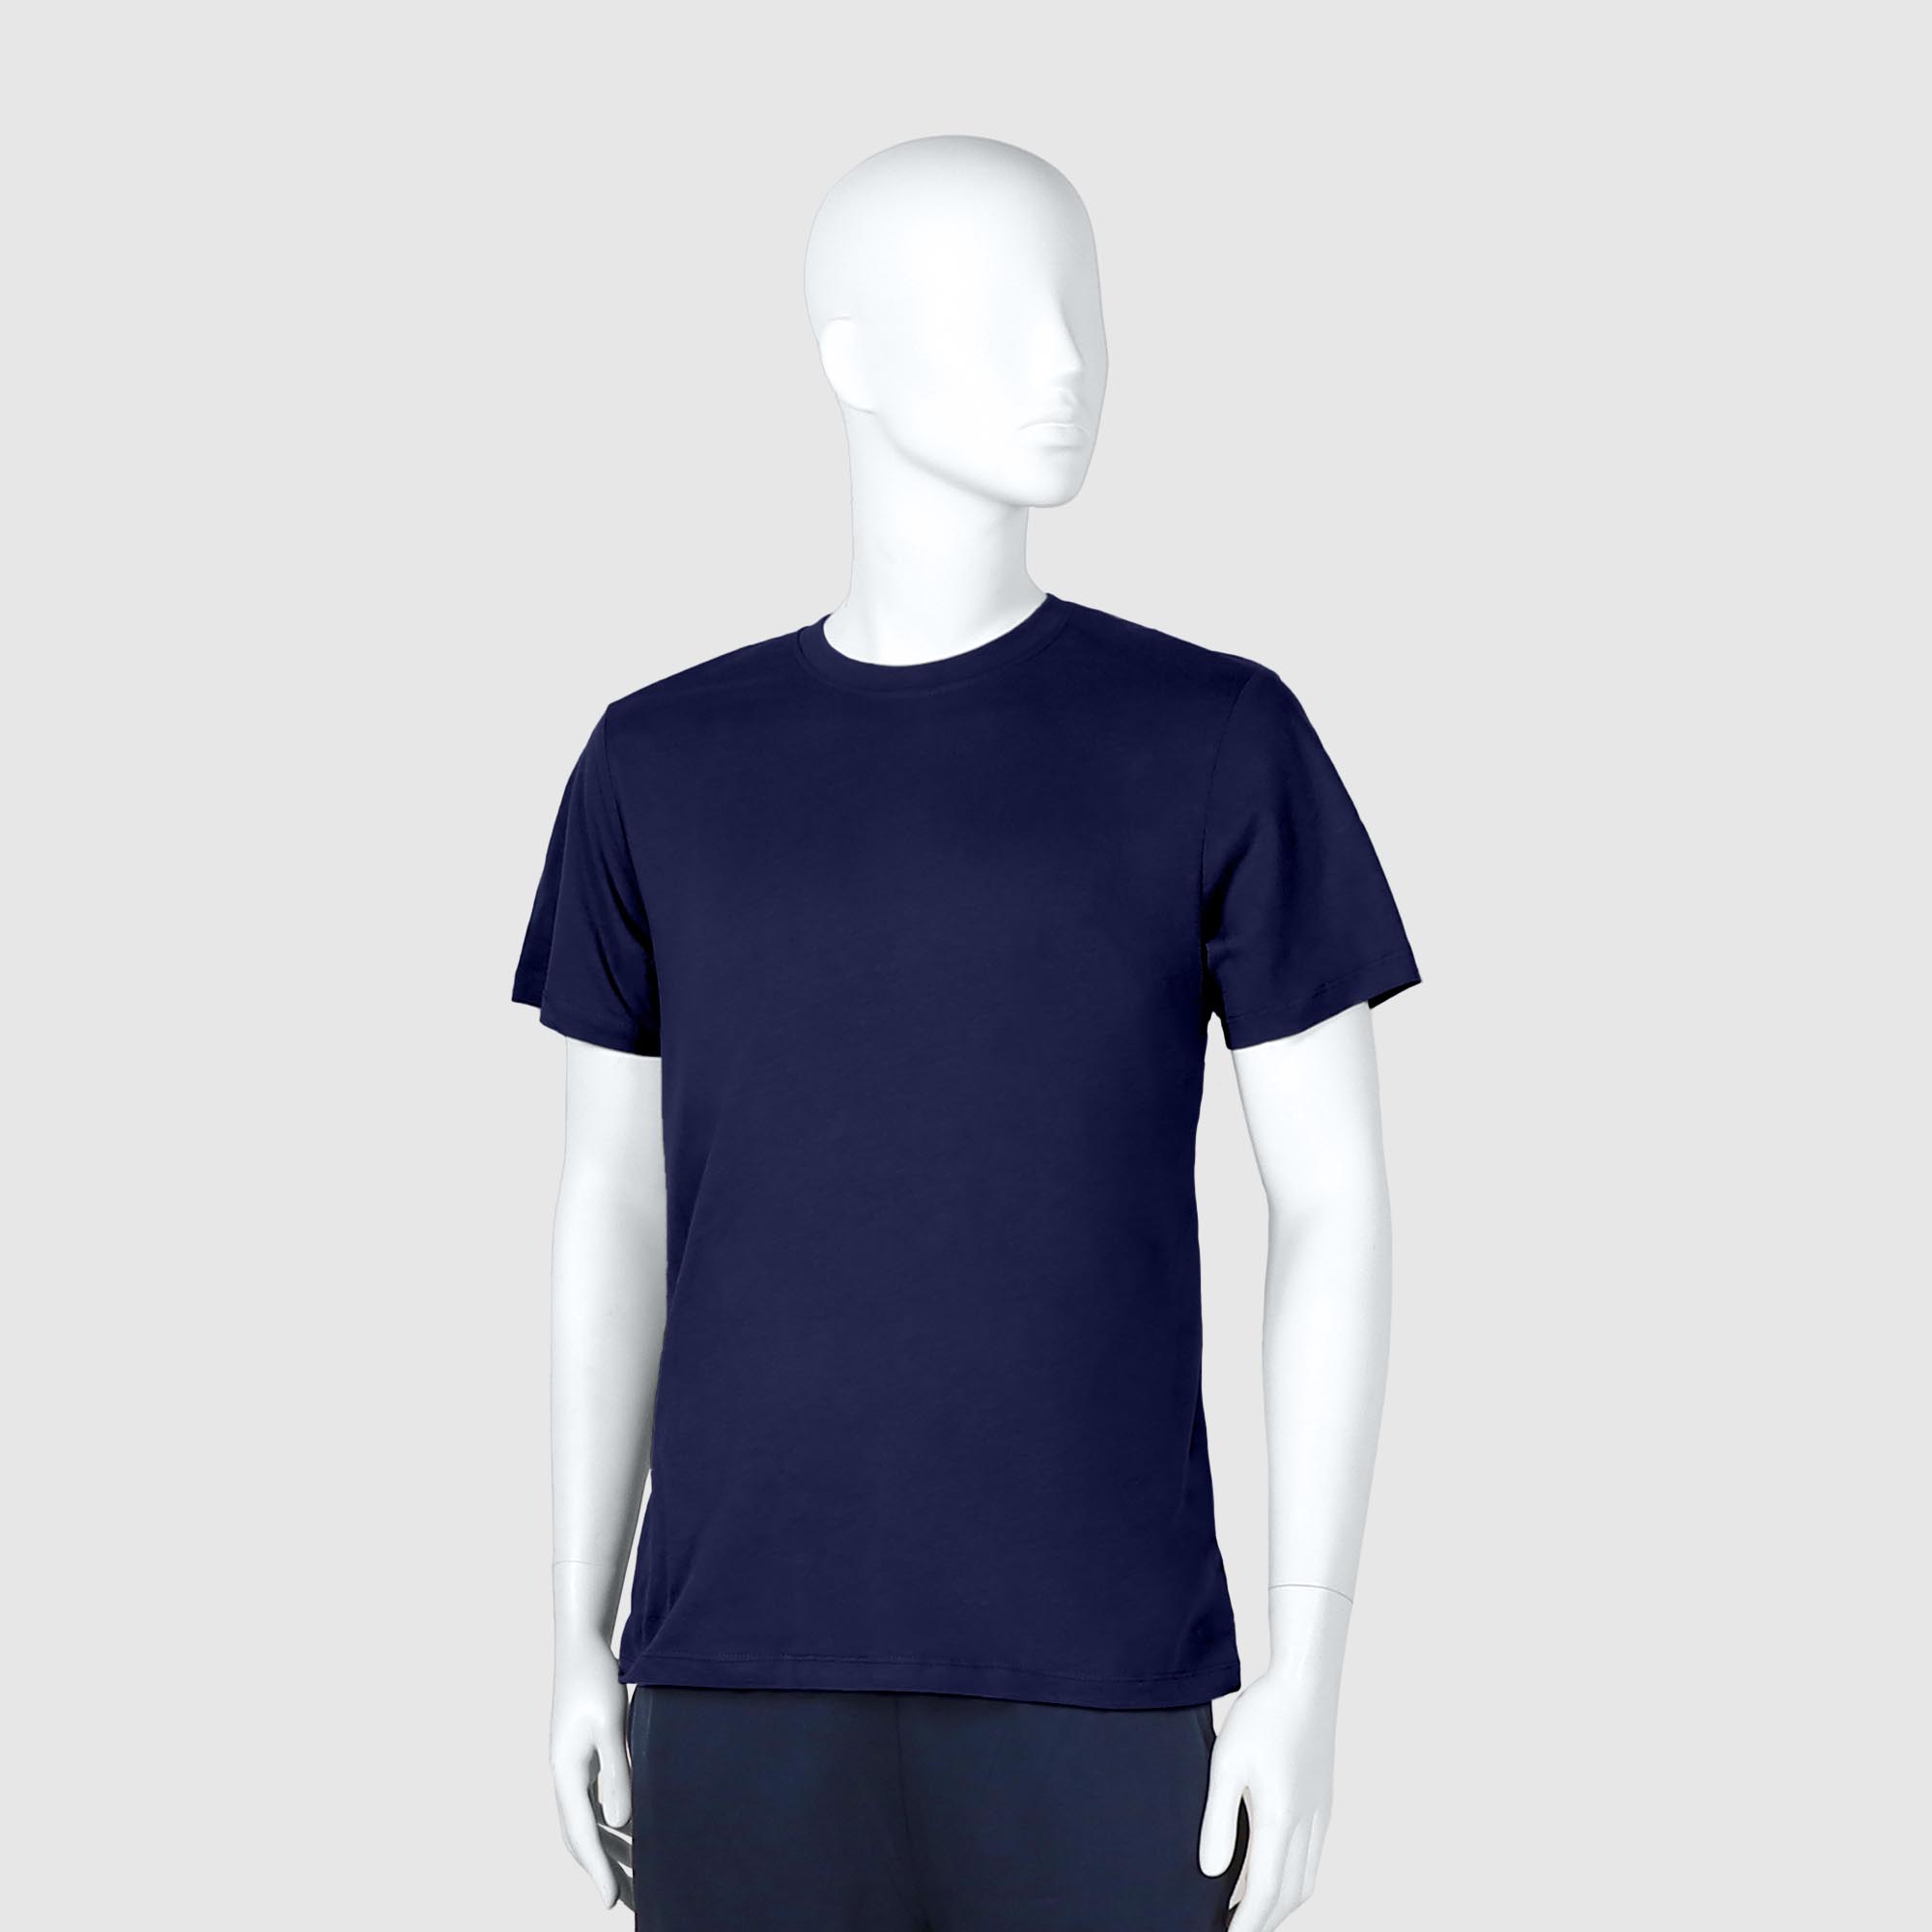 Мужская футболка Diva Teks синяя (DTD-05), цвет синий, размер 54-56